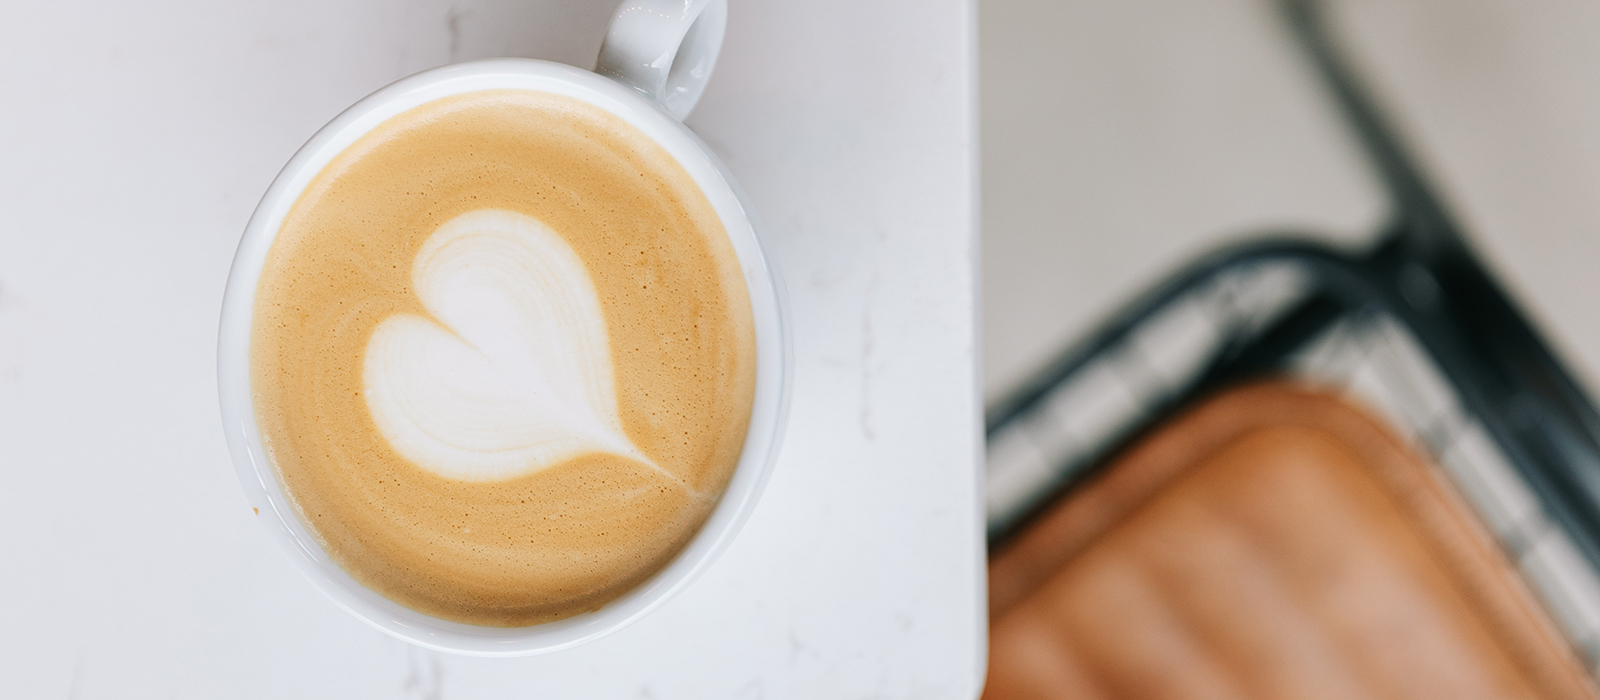 key latte art shapes